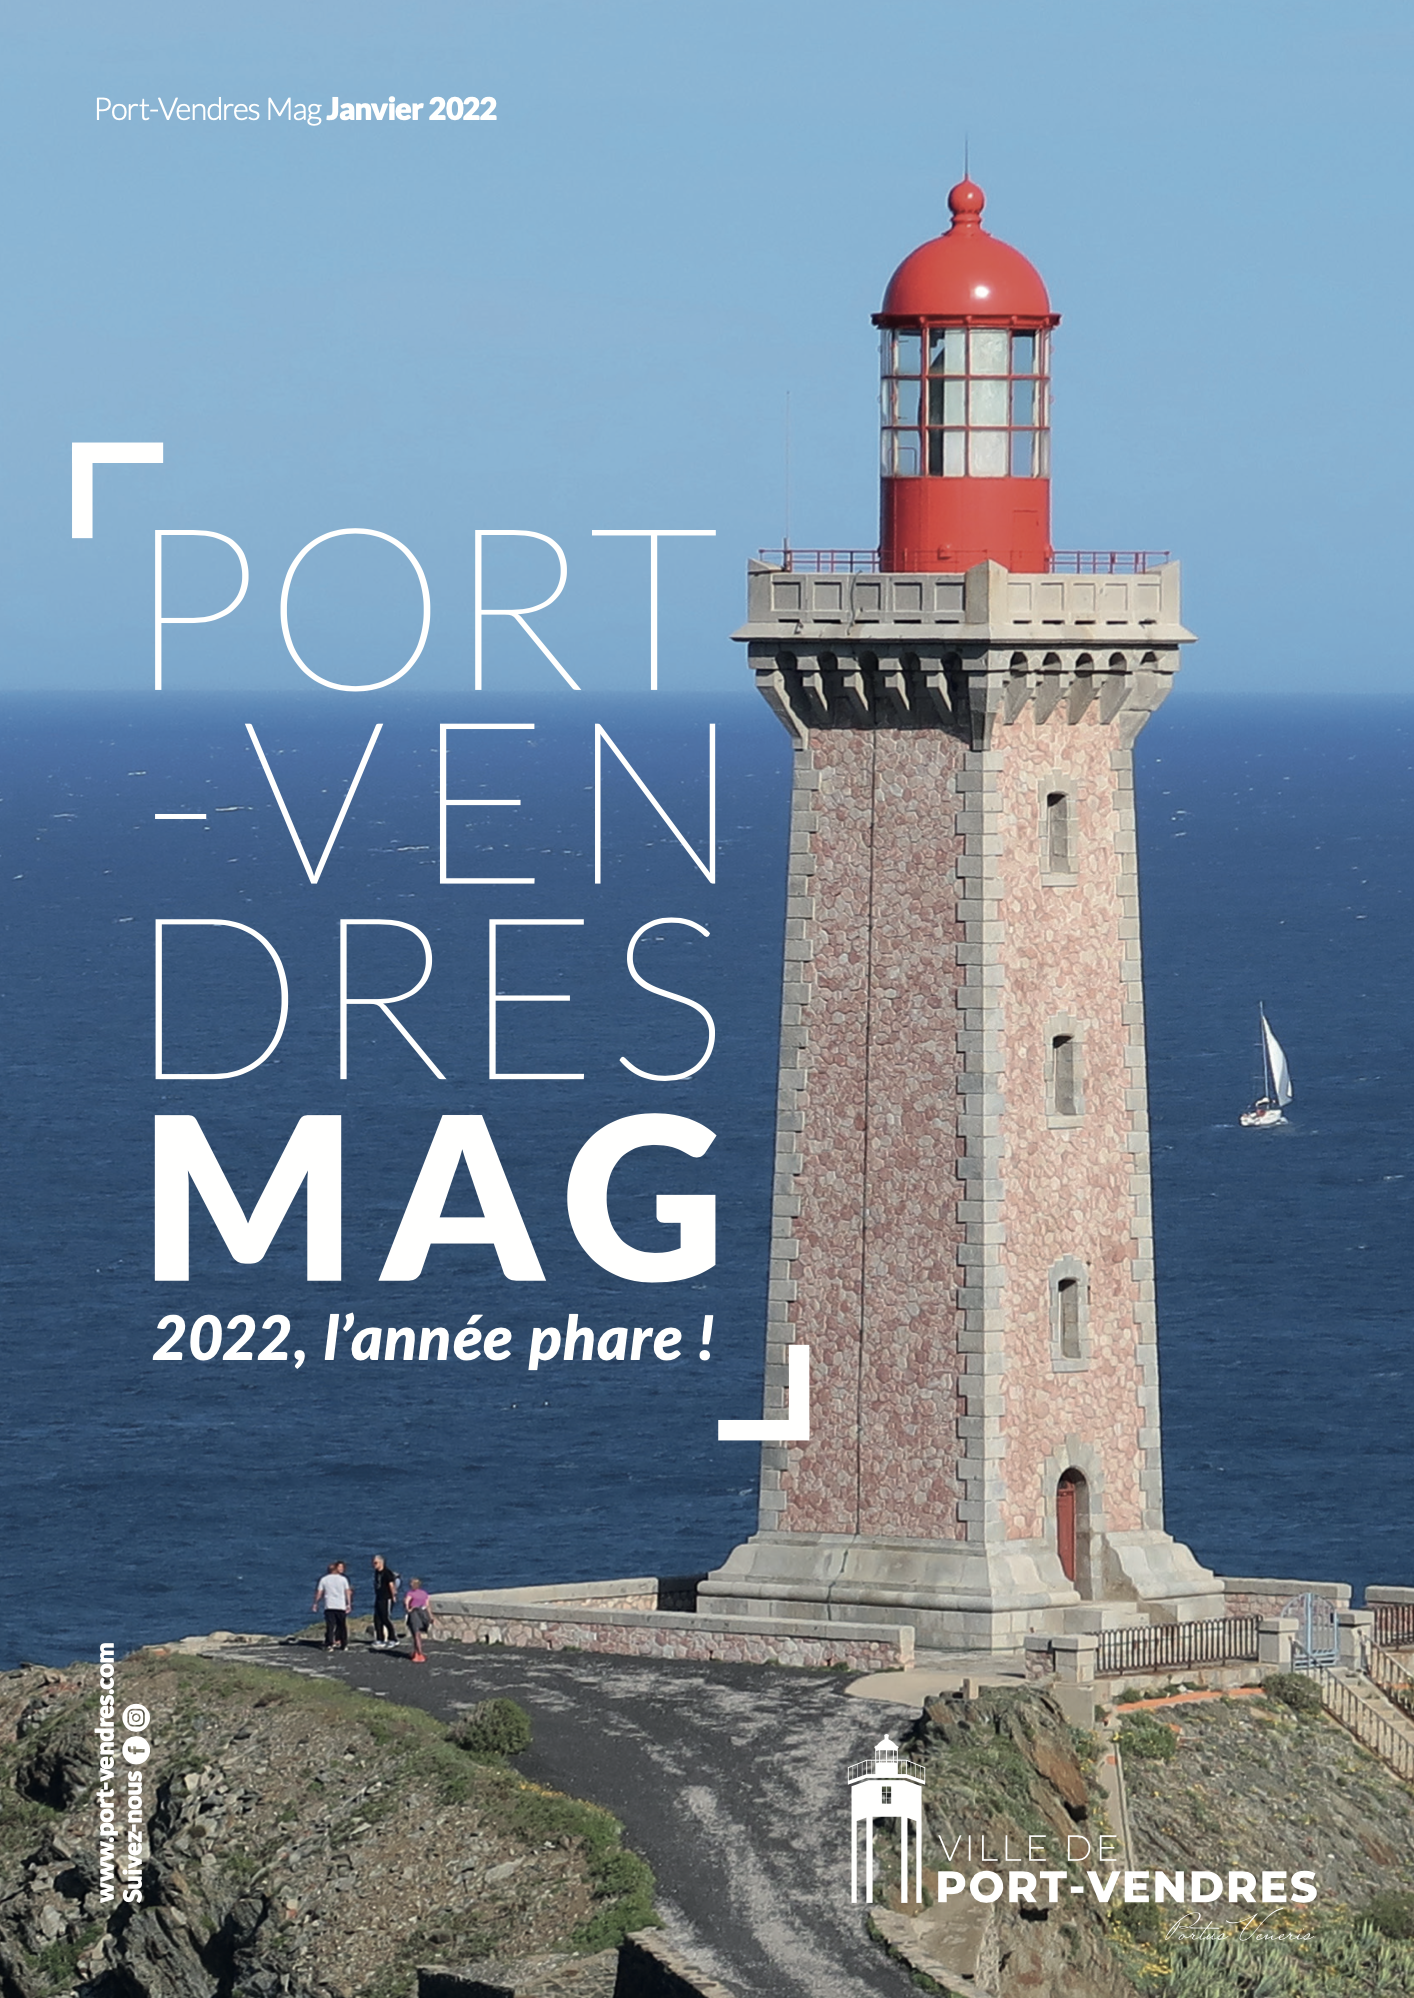 Image manquante : Port-Vendres Express Septembre- Octobre 2023